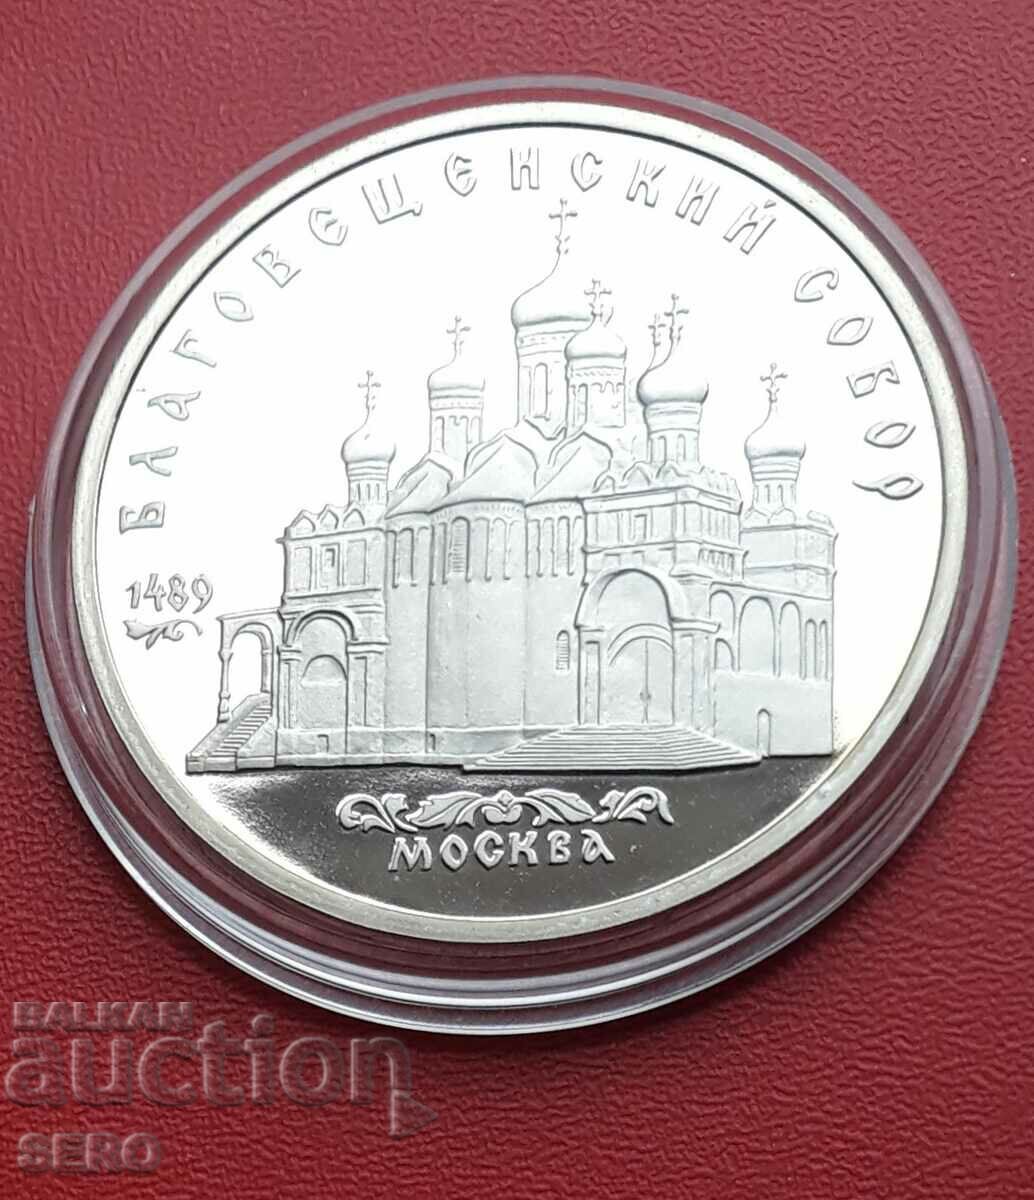 Russia-USSR-5 rubles 1989-Moscow-matt-glossy